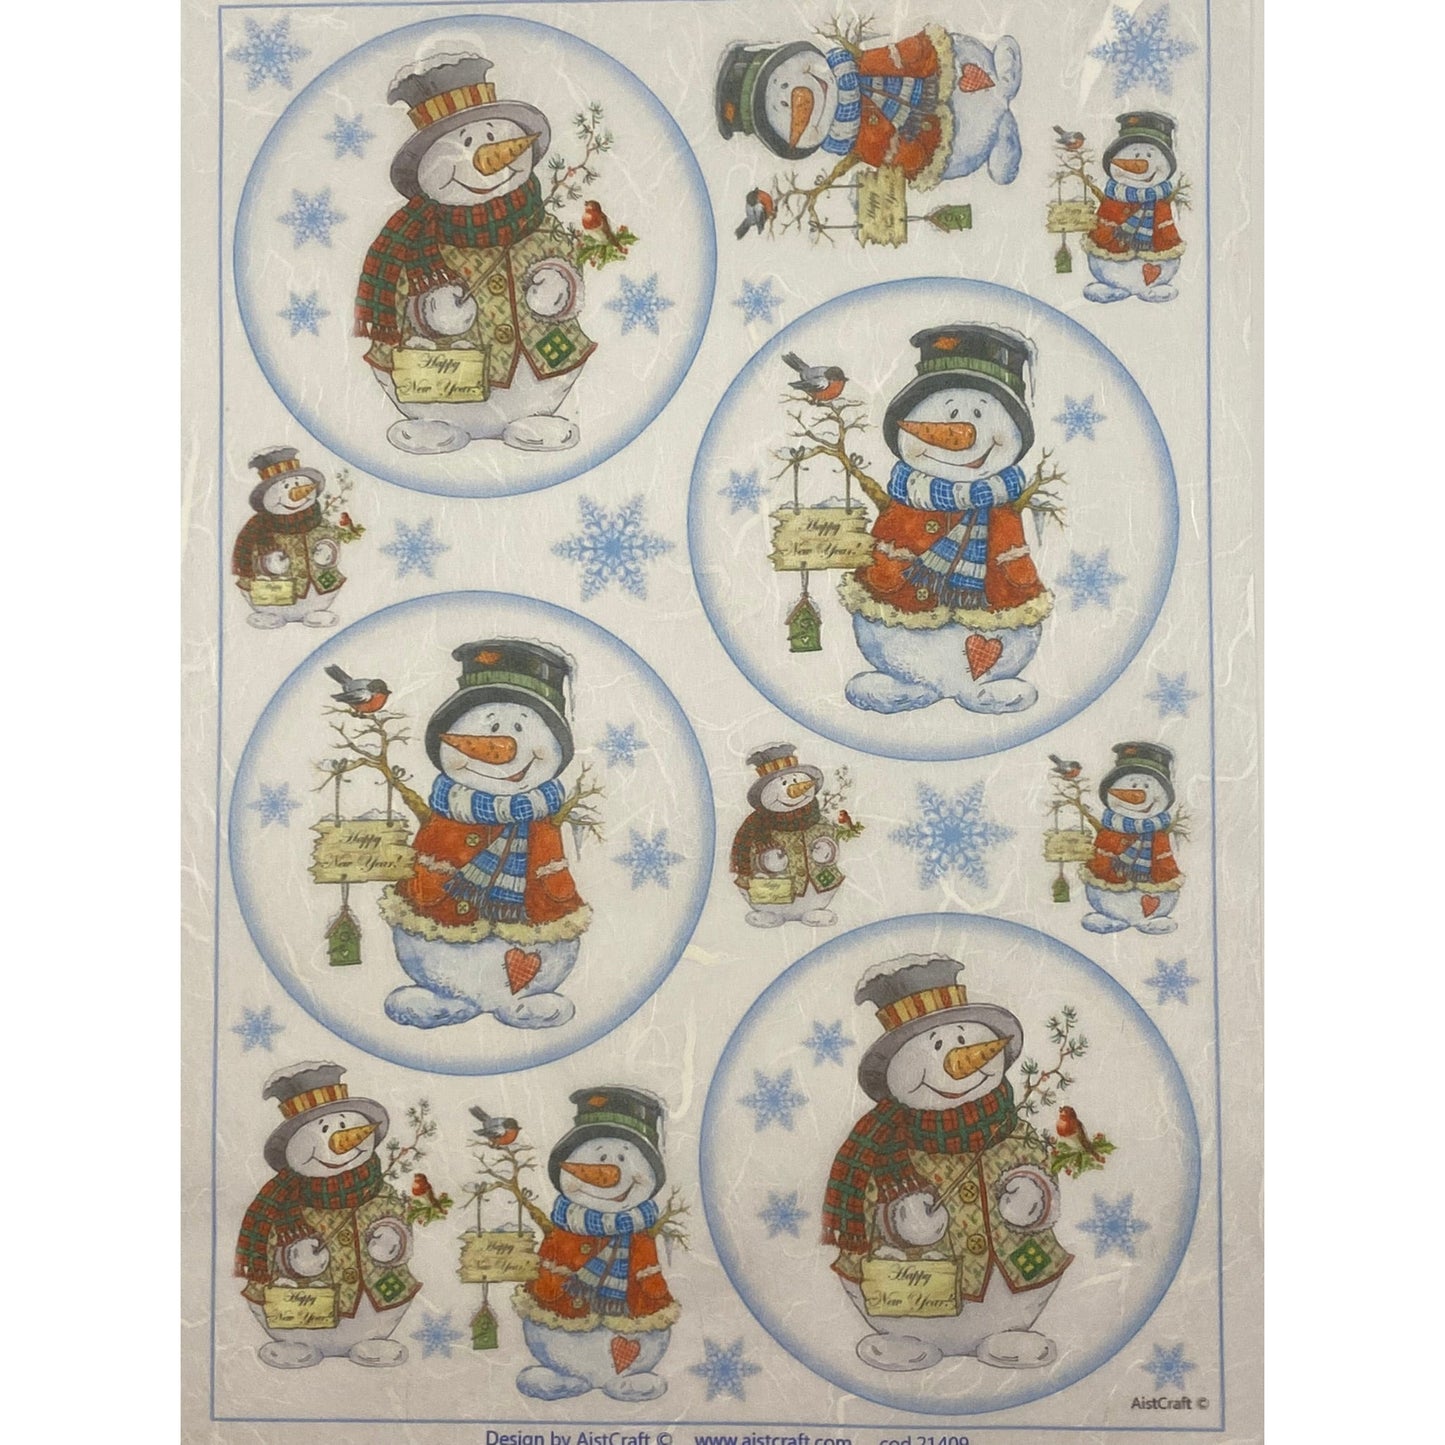 21409 - Decoupage Rice Paper - Winter Snowman, Forest Friends, Woodland Friends Snowman